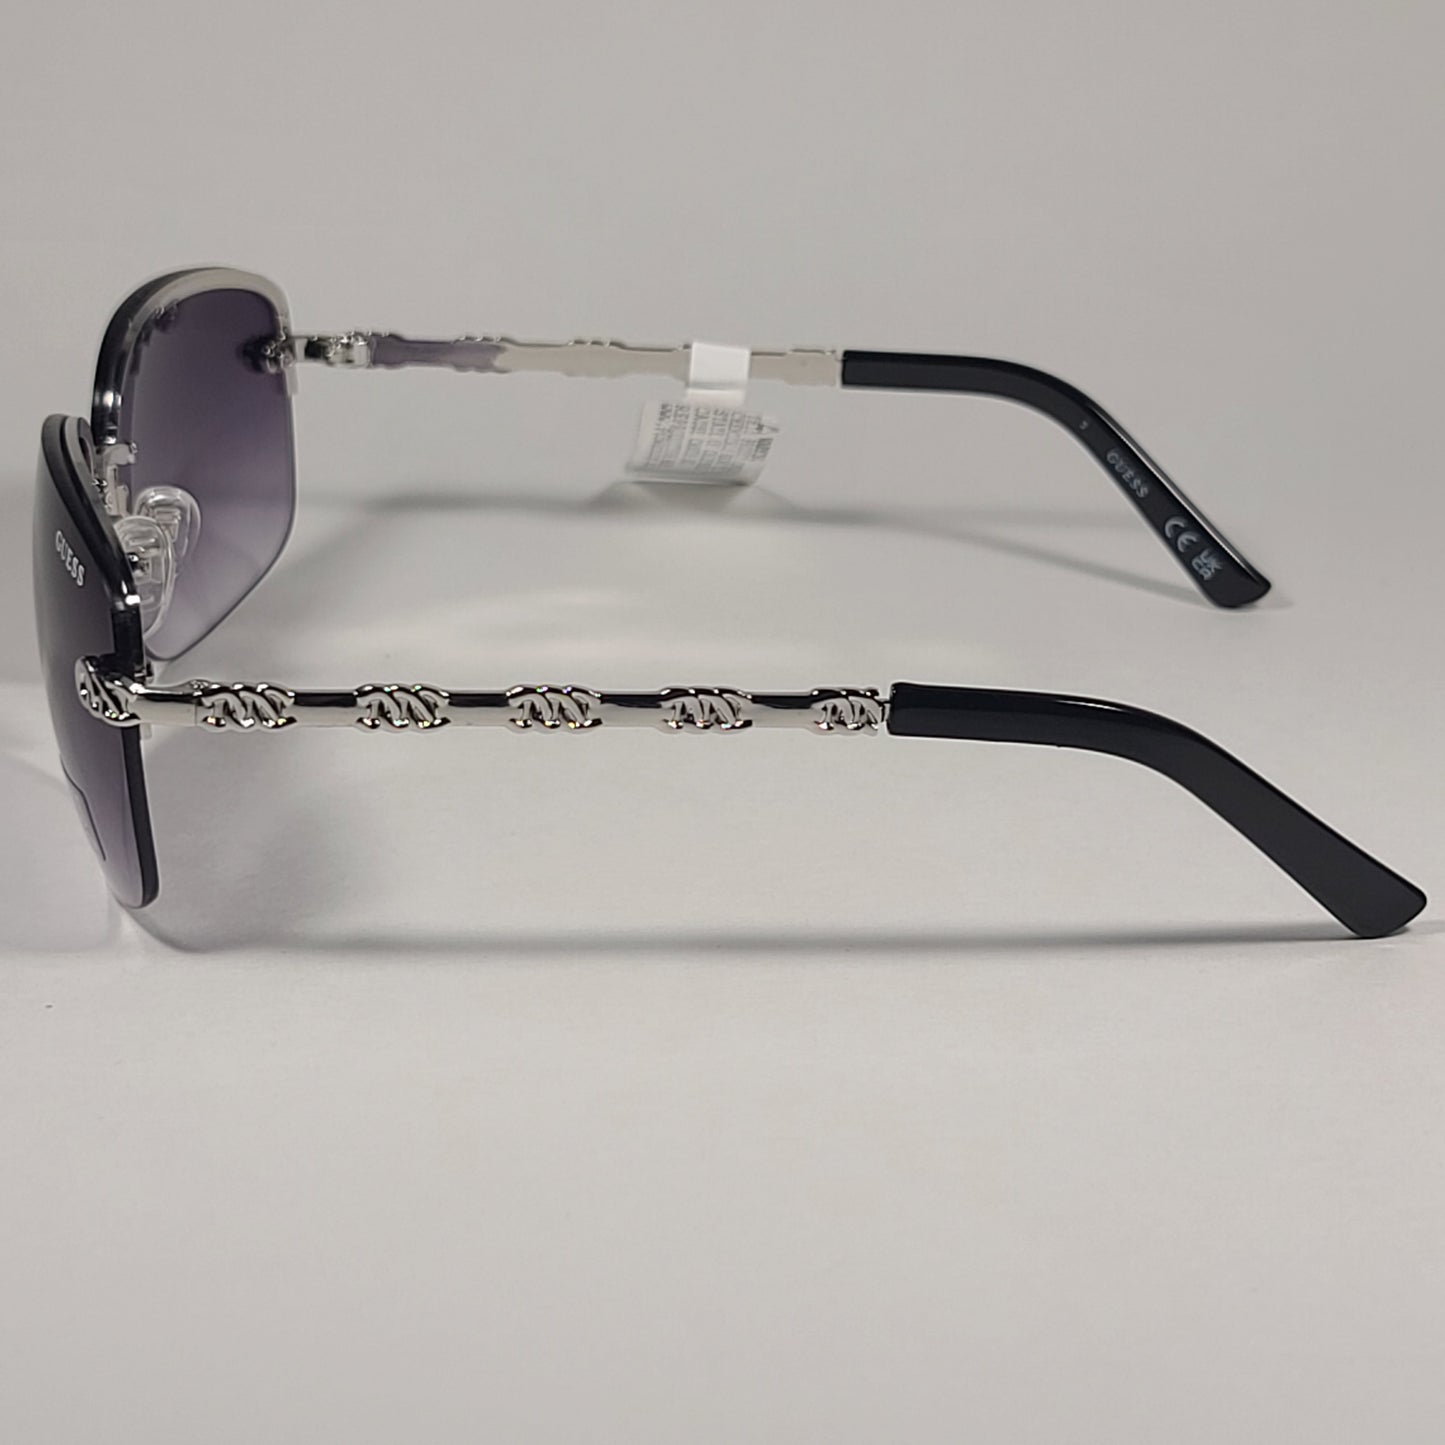 Guess GF0388 10B Rimless Sunglasses Silver Tone Frame Metal Smoke Gradient Lens - Sunglasses